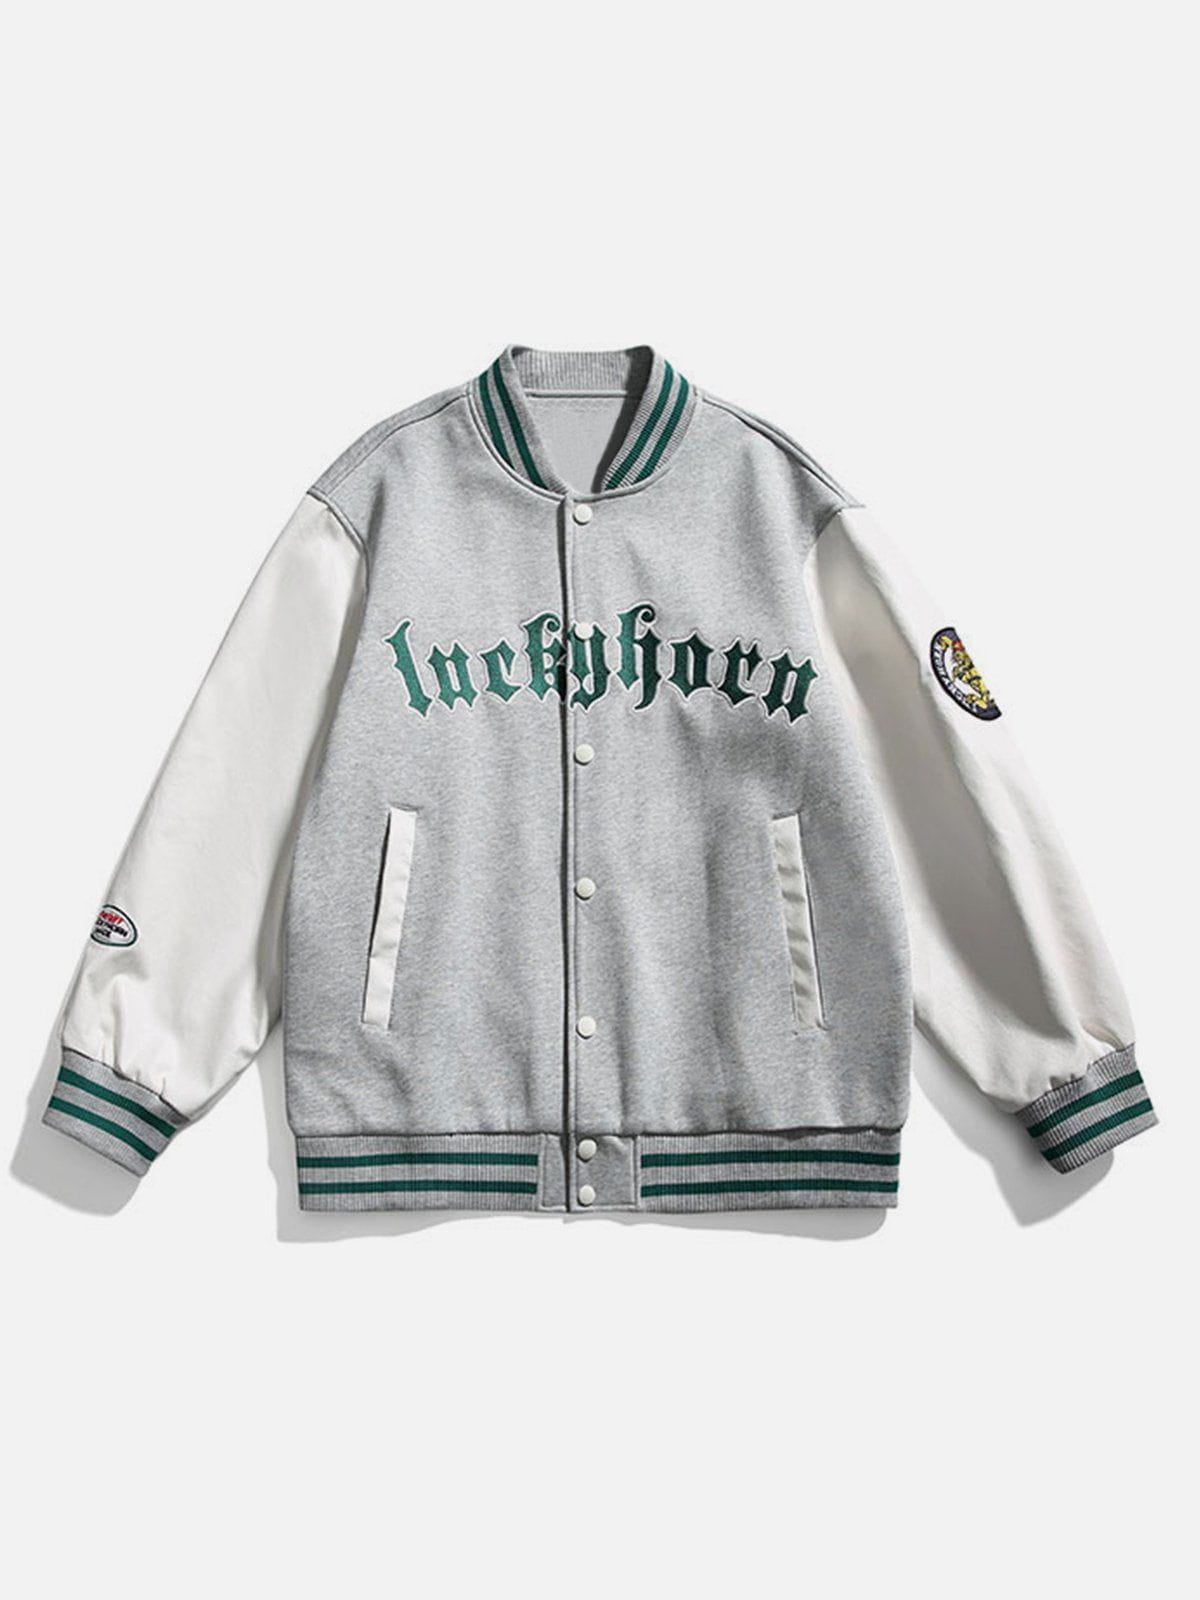 LUXENFY™ - Patchwork Luckyhorn Varsity Jackets luxenfy.com